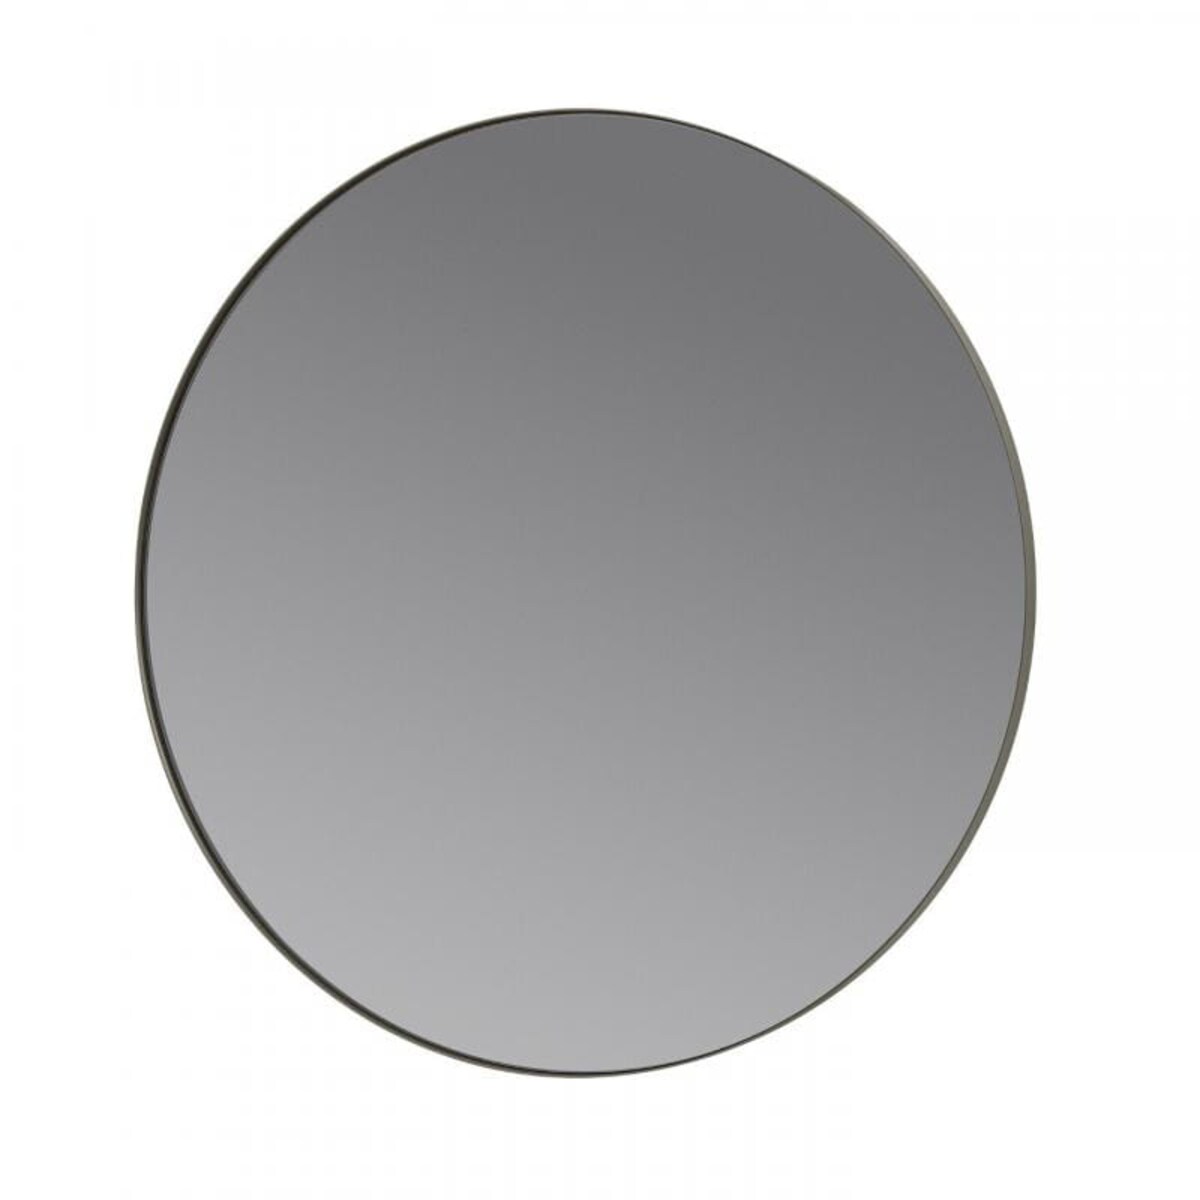 Lustro ścienne dymione RIM - steel grey, 80 cm